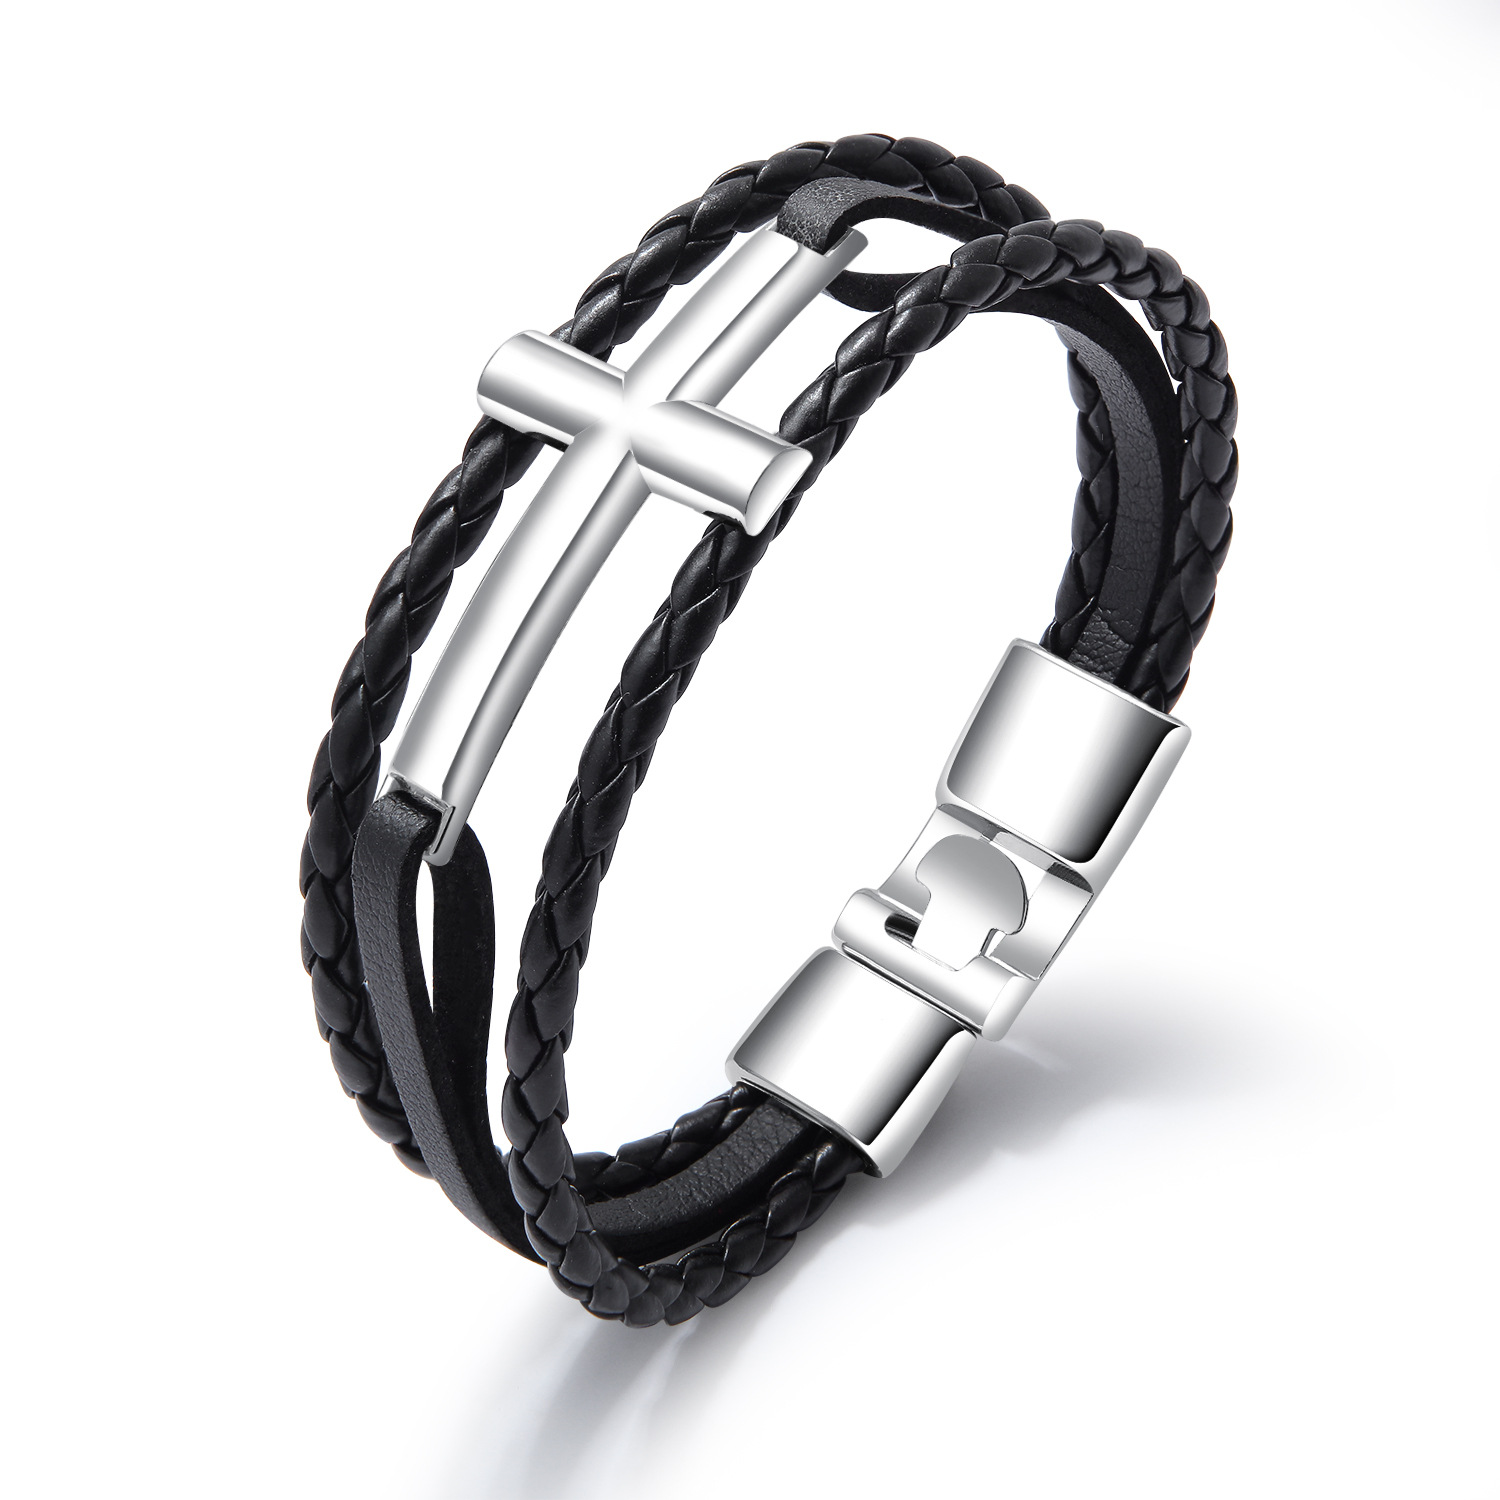 PU Leather Bracelets